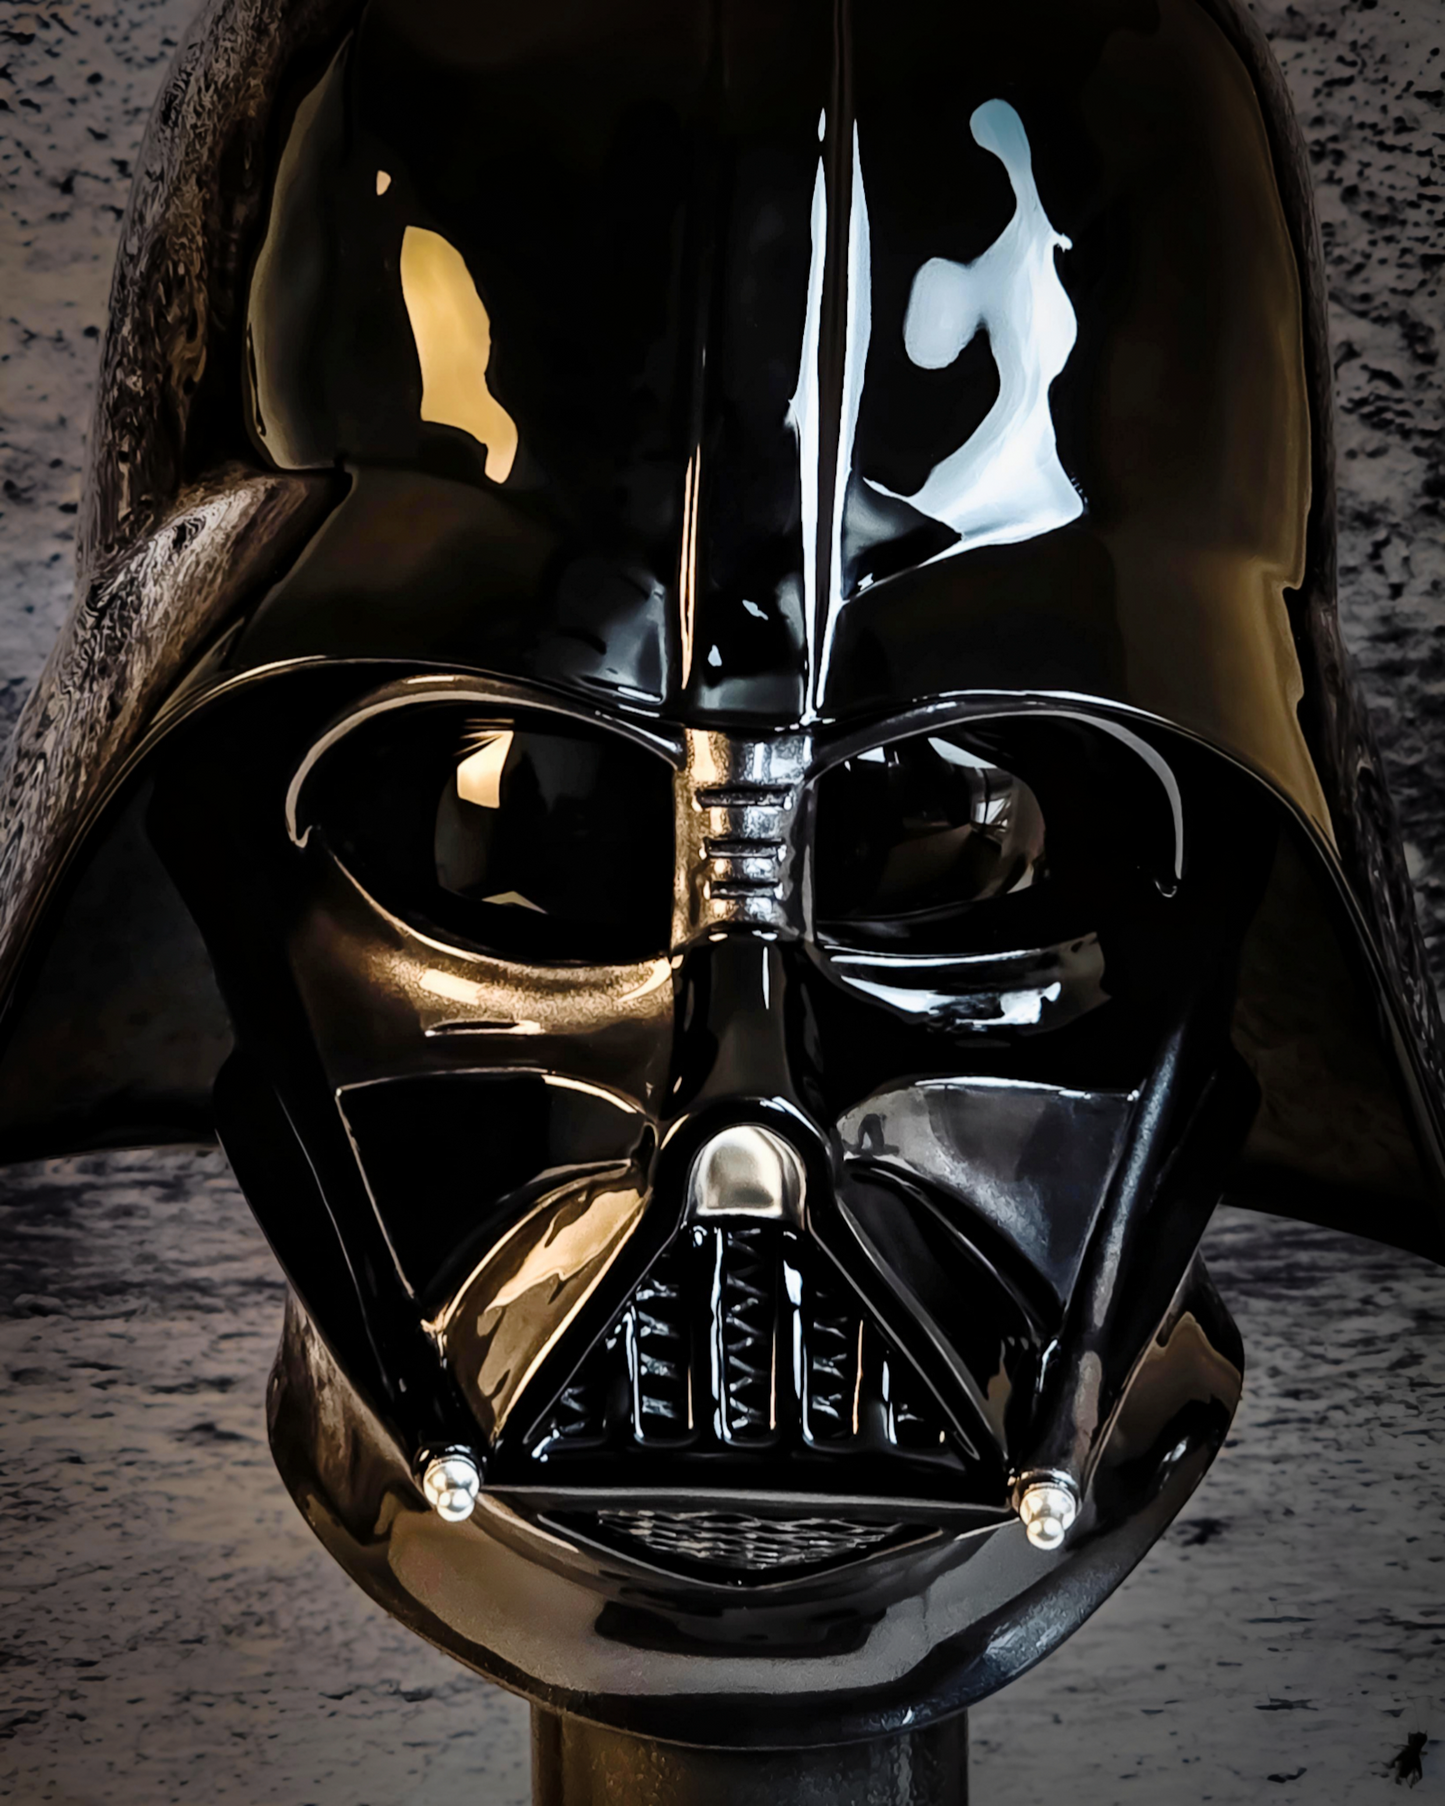 Empire Strikes Back  Helmet (SALE)